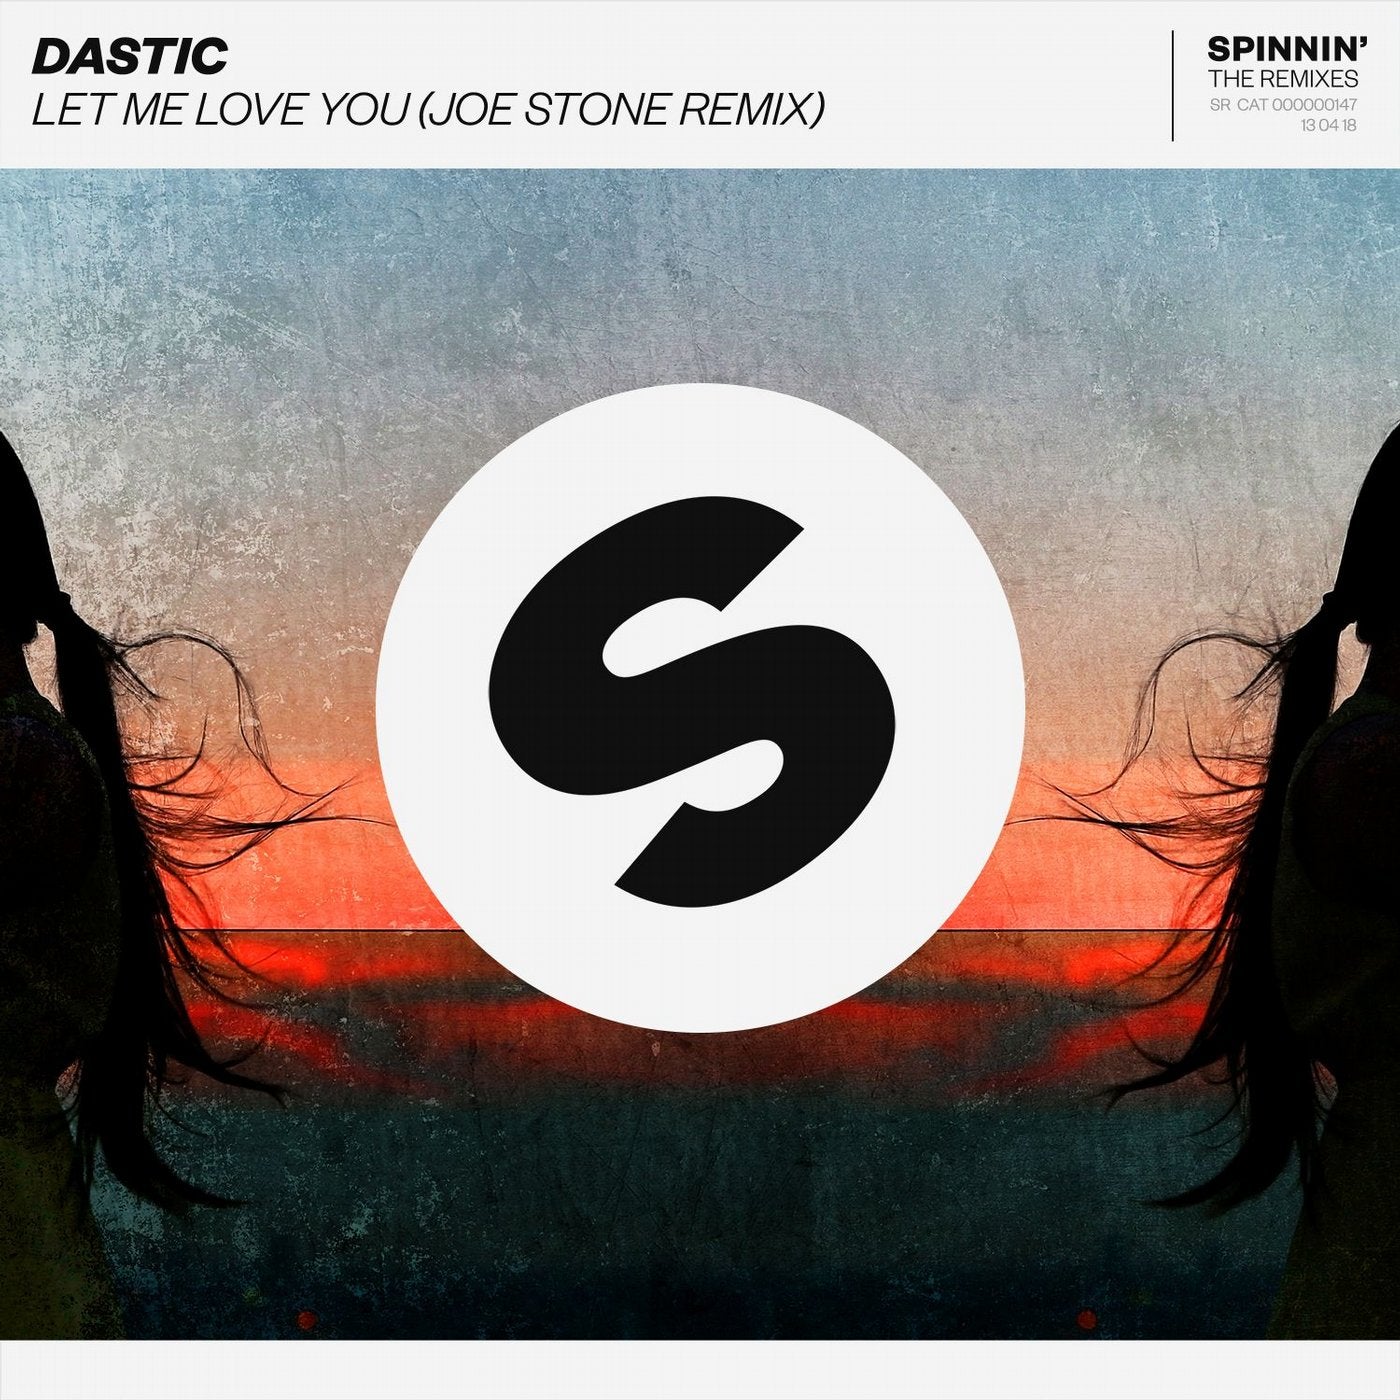 Joe stone. Dastic - Let me Love you. Let me Love you Joe Stone Remix; feat. Cade Dastic, Joe Stone. Spinnin Remixes. Dastic — Let me Love you (Joe Stone Remix).